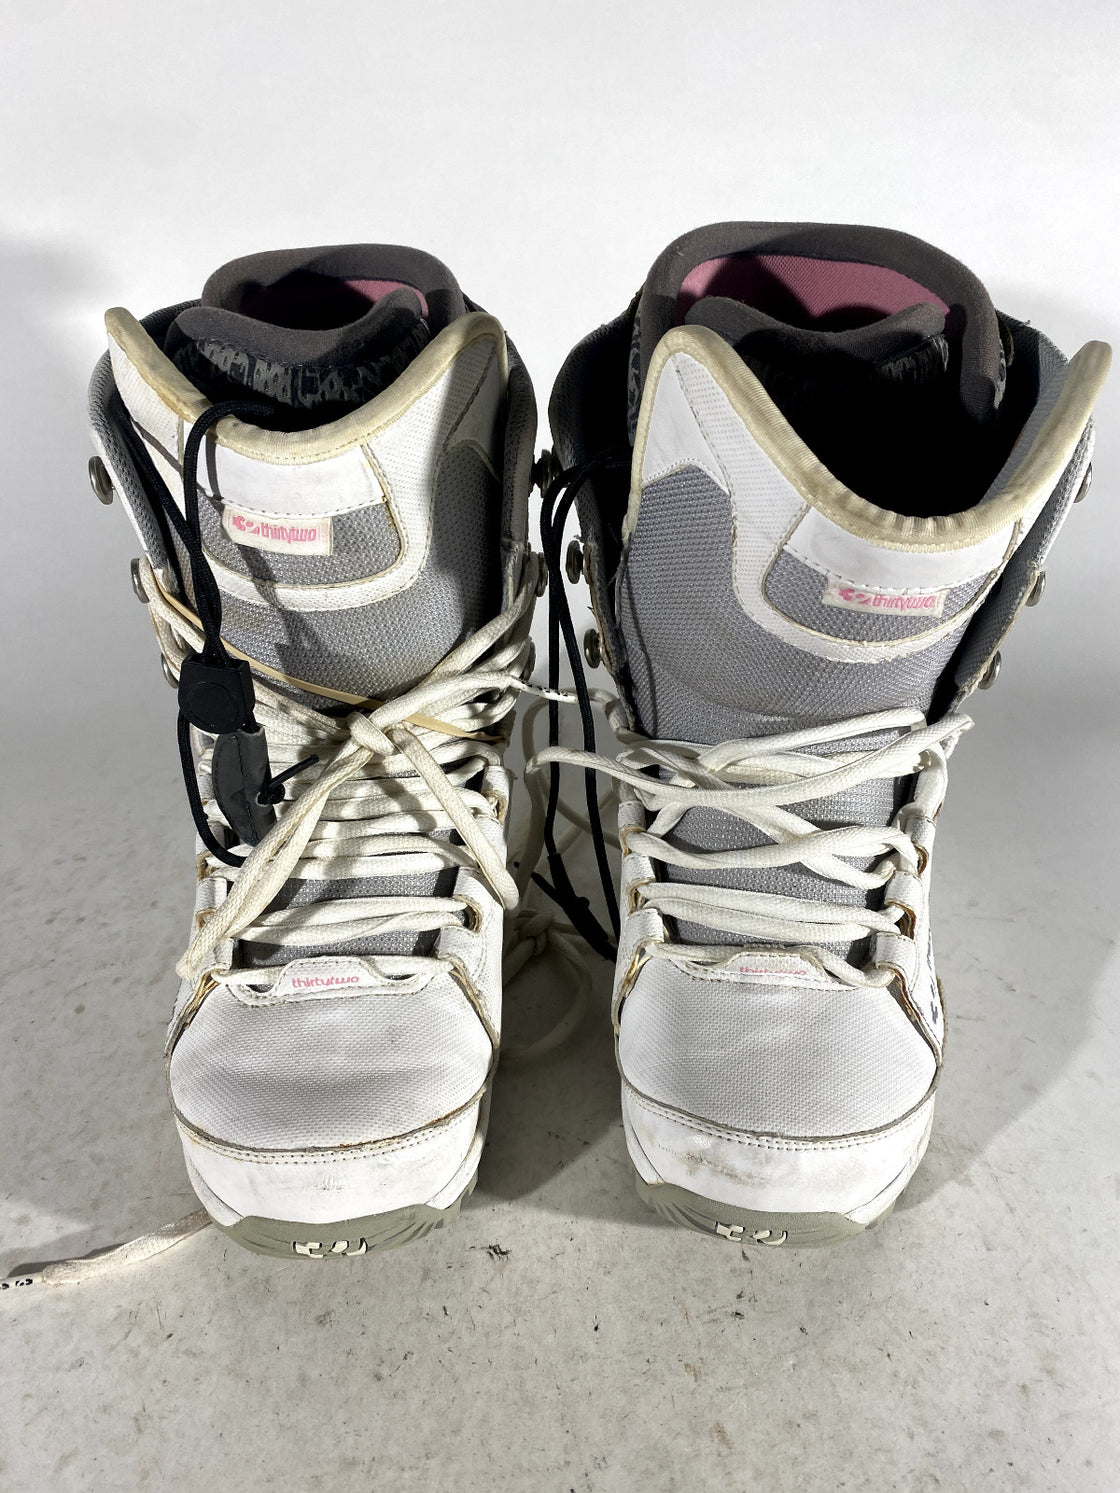 THIRTYTWO Snowboard Boots Ladies Size EU37.5 US7 UK4.5 Mondo 240 mm